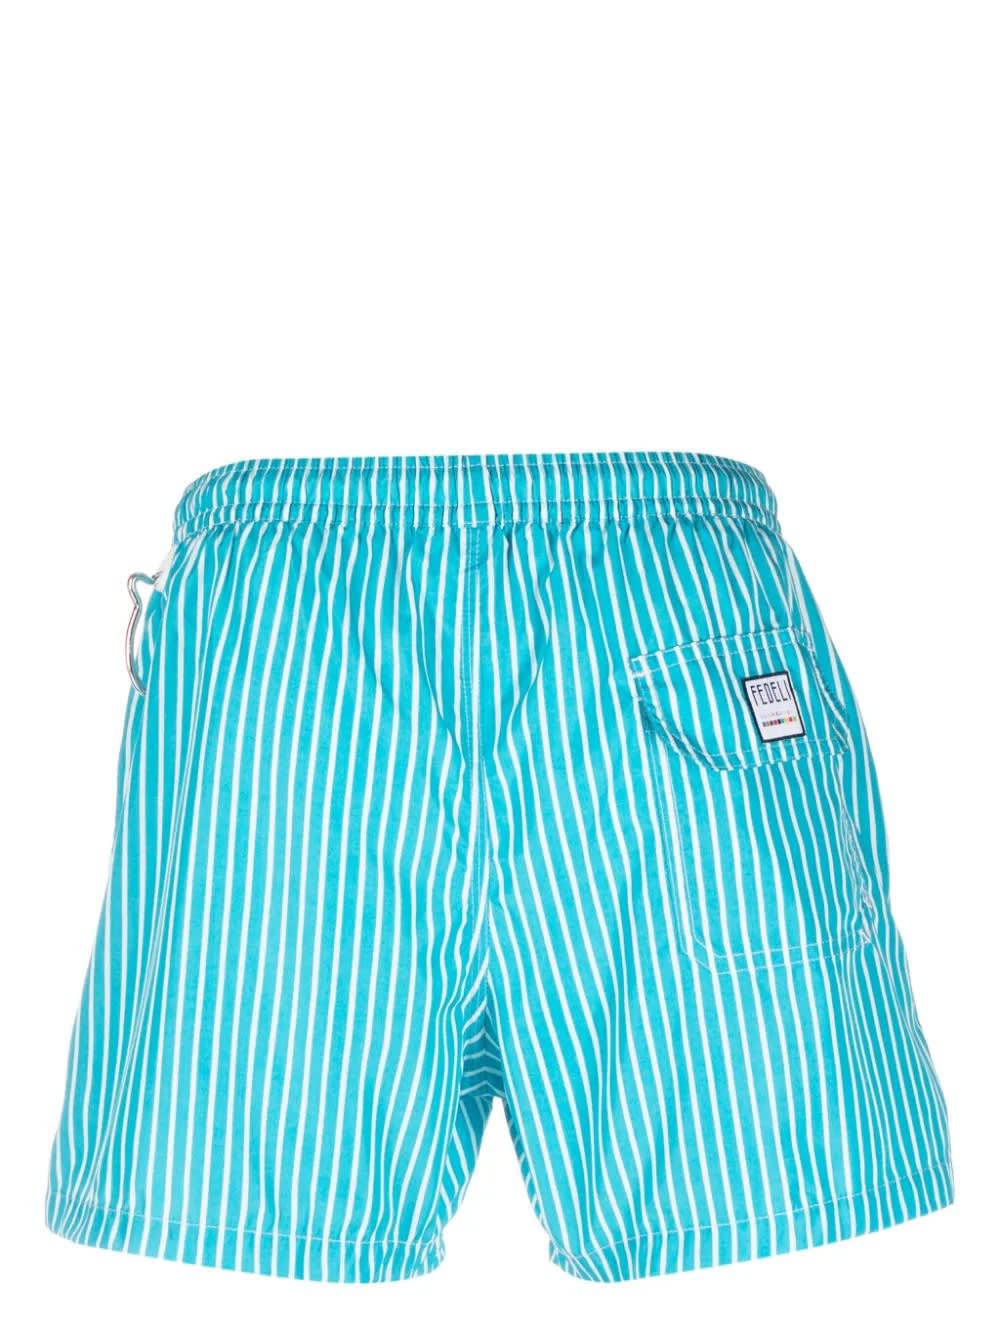 Shop Fedeli Light Blue And White Striped Swim Shorts